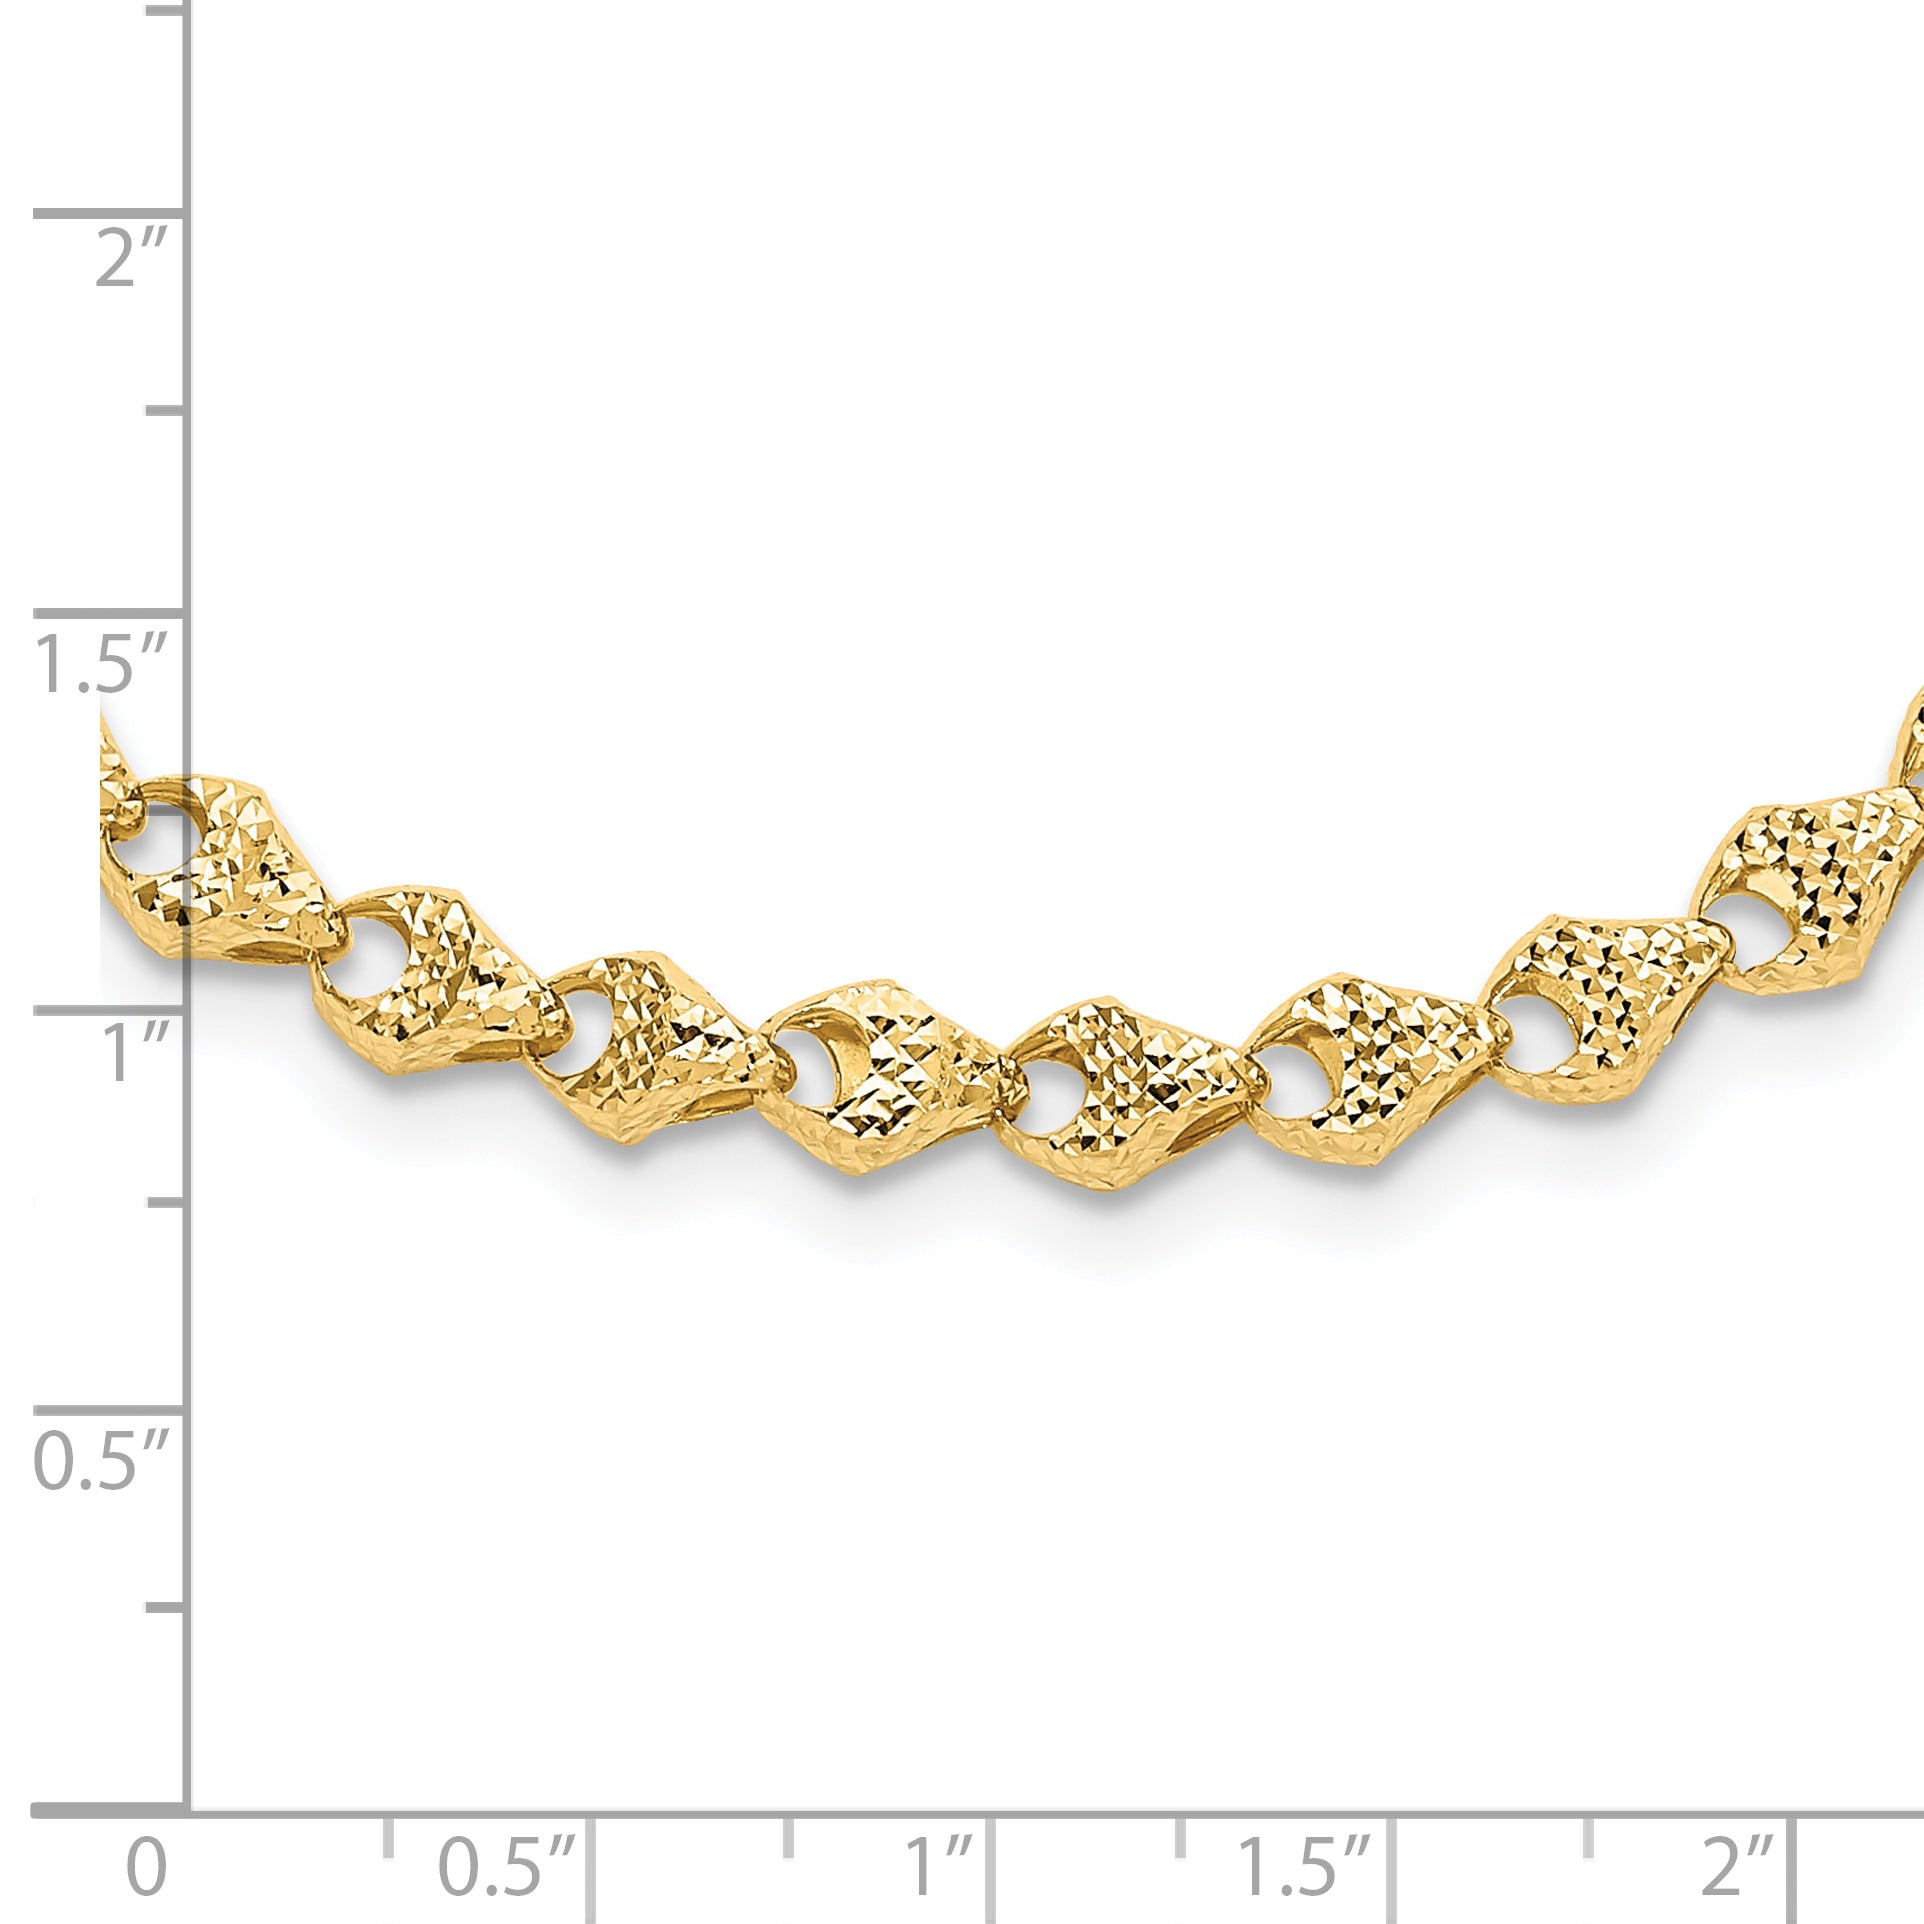 14K Diamond-cut Fancy Link Necklace - Speical Order 3-4 Weeks